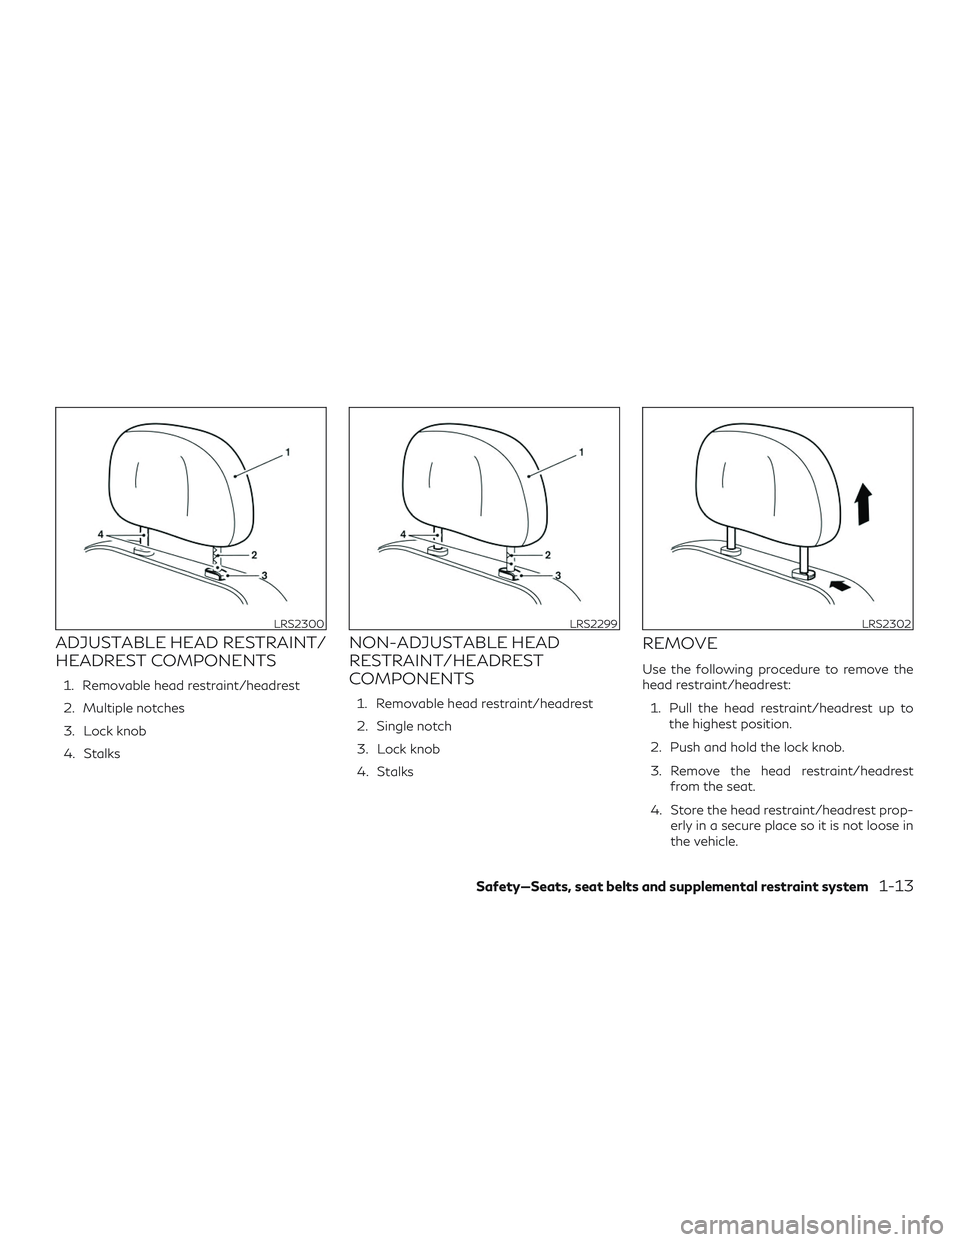 INFINITI QX60 2019 Owners Guide ADJUSTABLE HEAD RESTRAINT/
HEADREST COMPONENTS
1. Removable head restraint/headrest
2. Multiple notches
3. Lock knob
4. Stalks
NON-ADJUSTABLE HEAD
RESTRAINT/HEADREST
COMPONENTS
1. Removable head restr